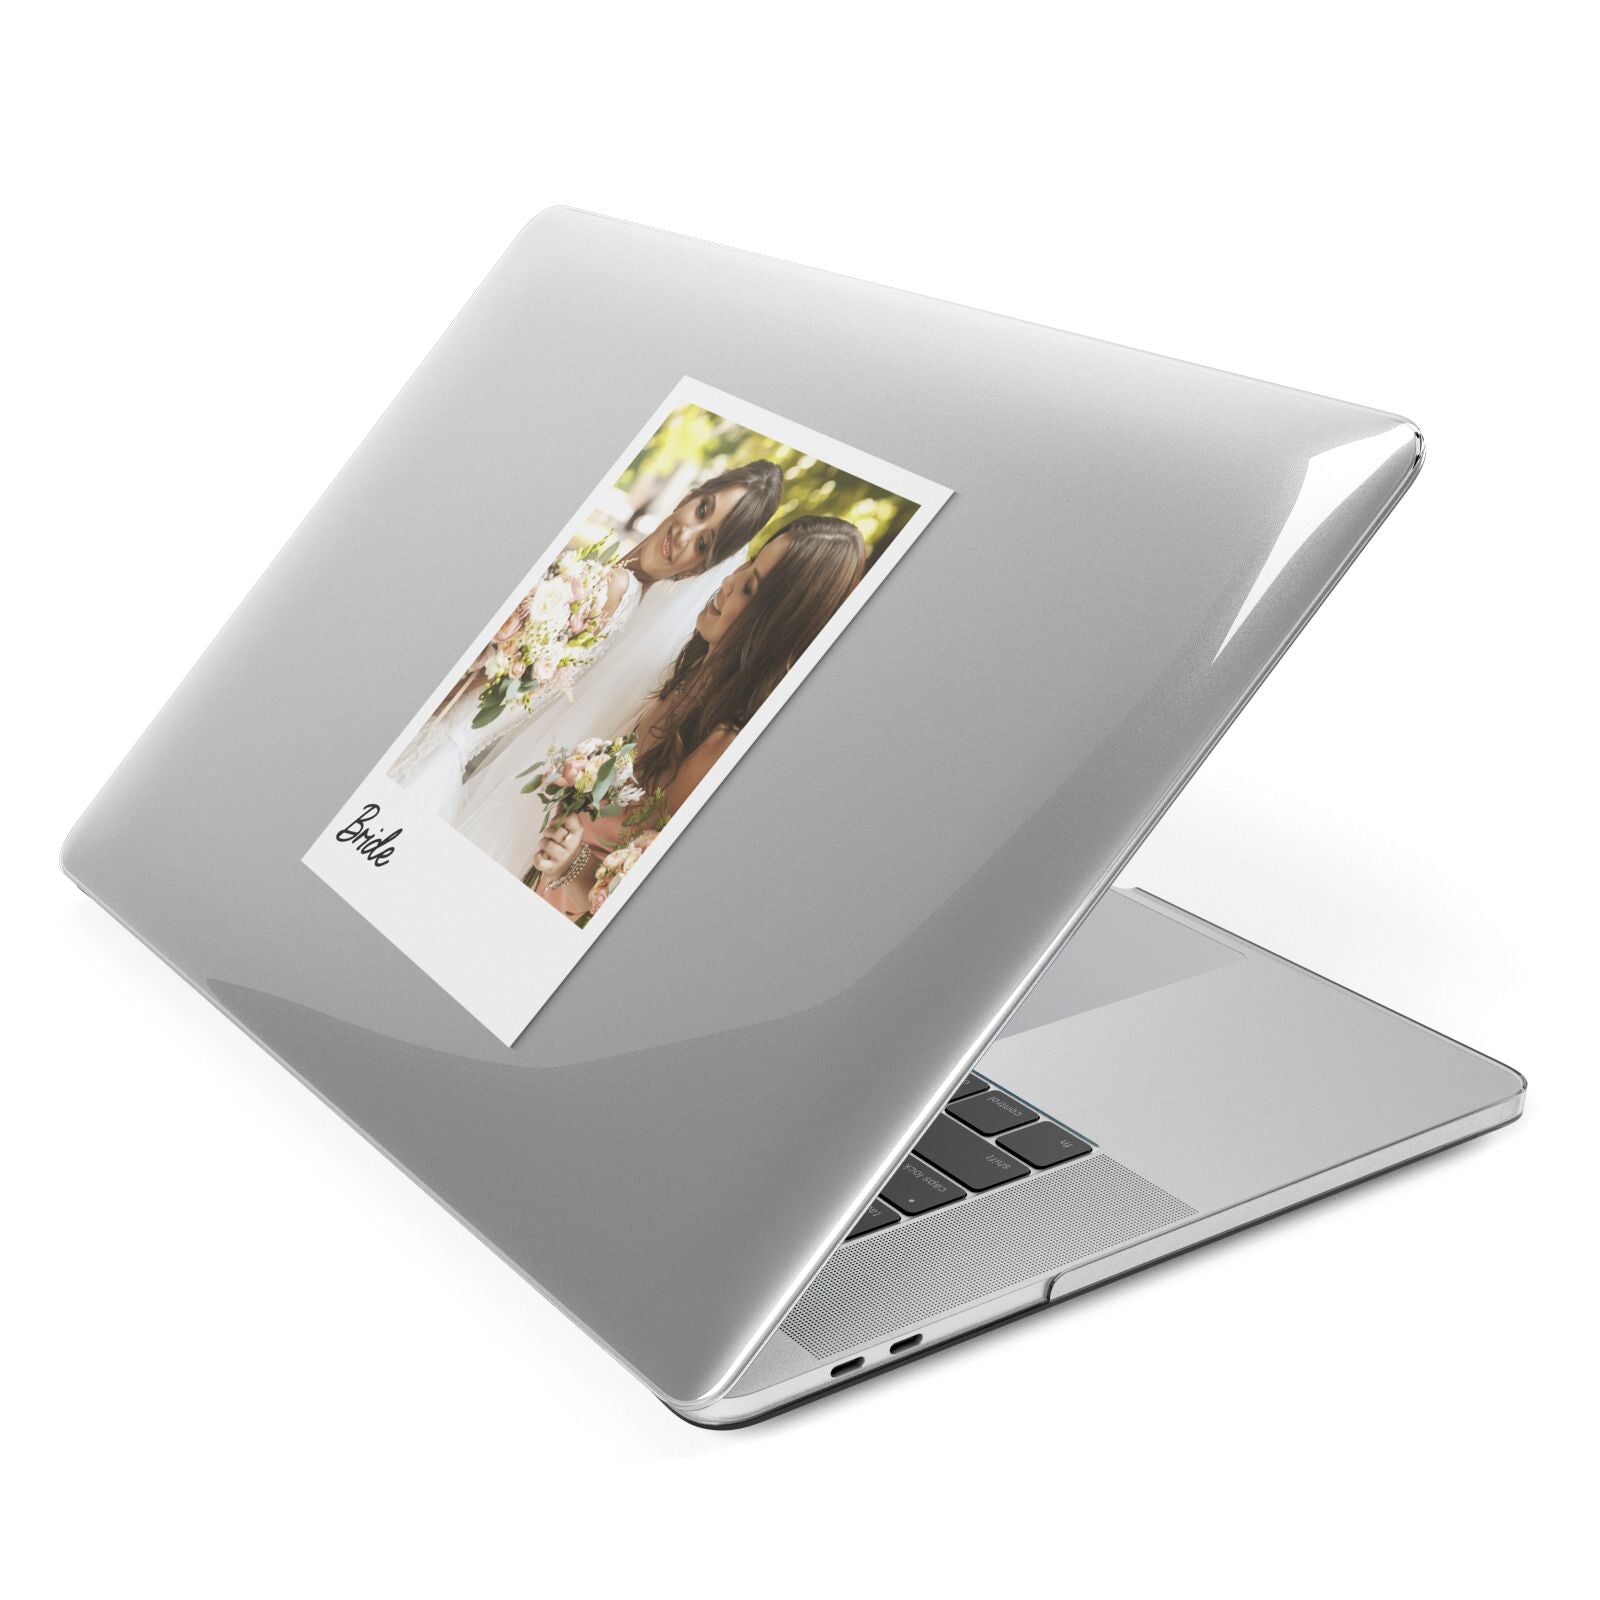 Bridal Photo Apple MacBook Case Side View